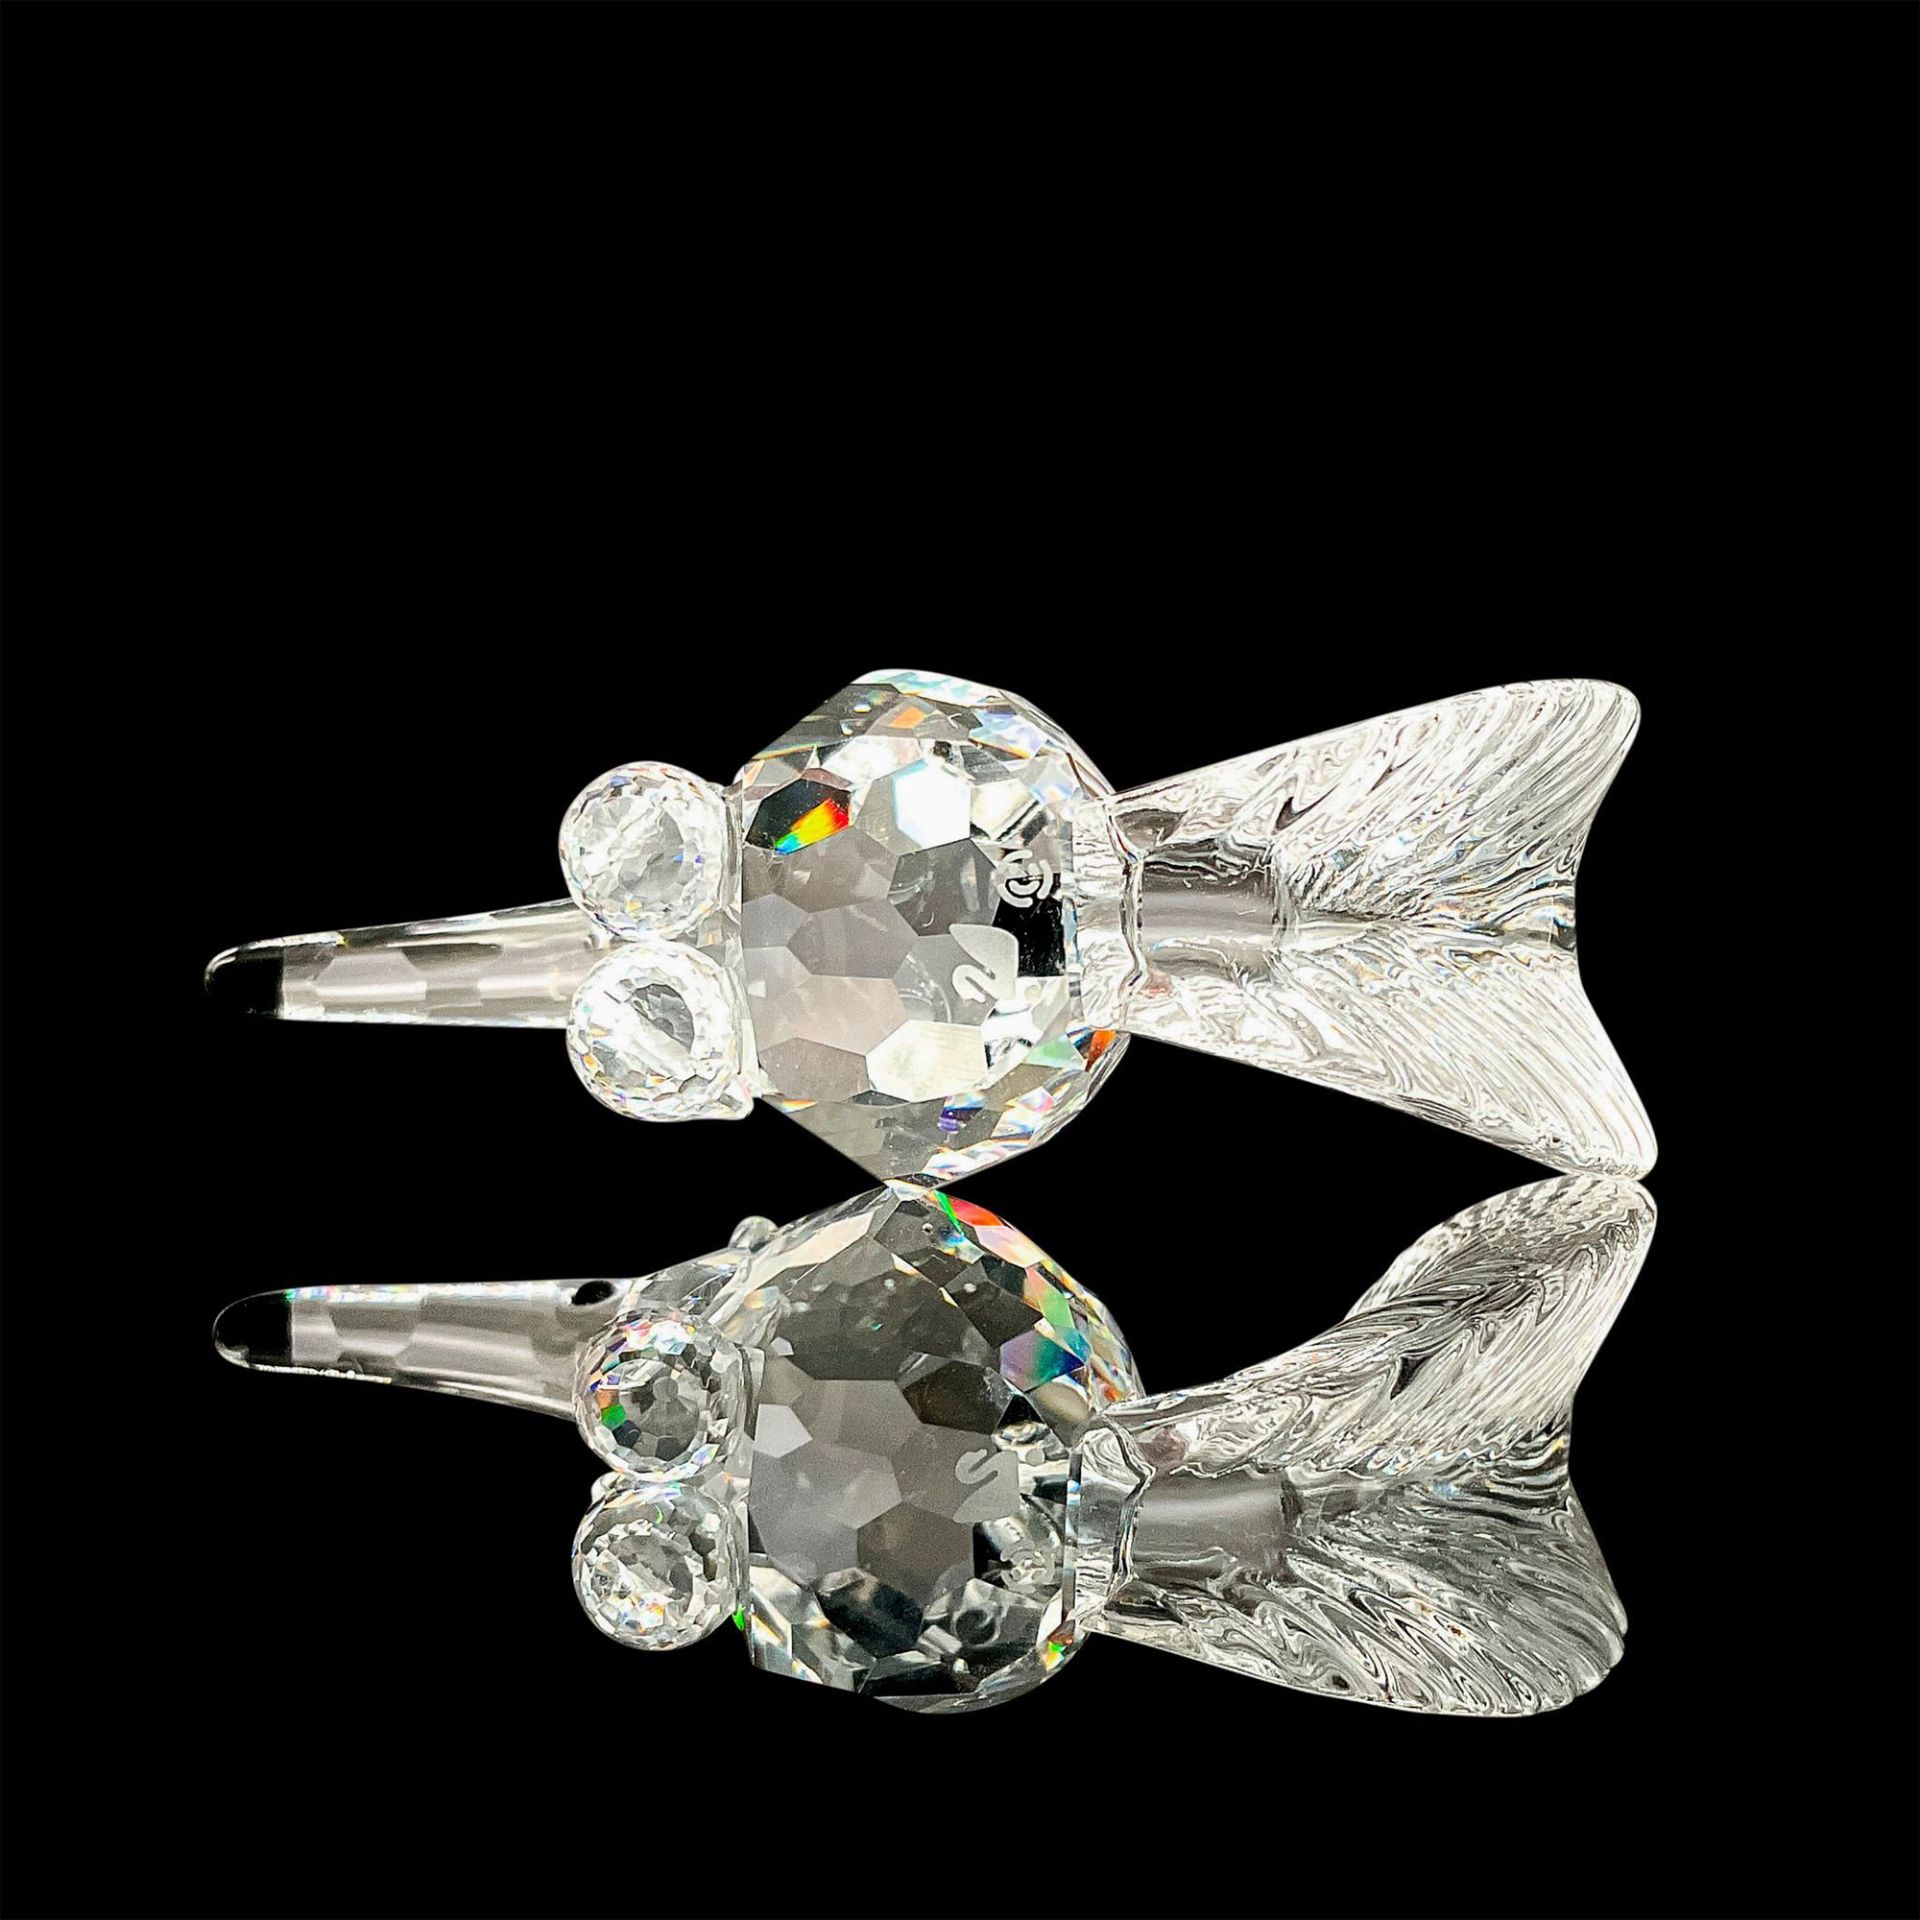 Swarovski Silver Crystal Miniature Figurine, Anteater - Image 4 of 4